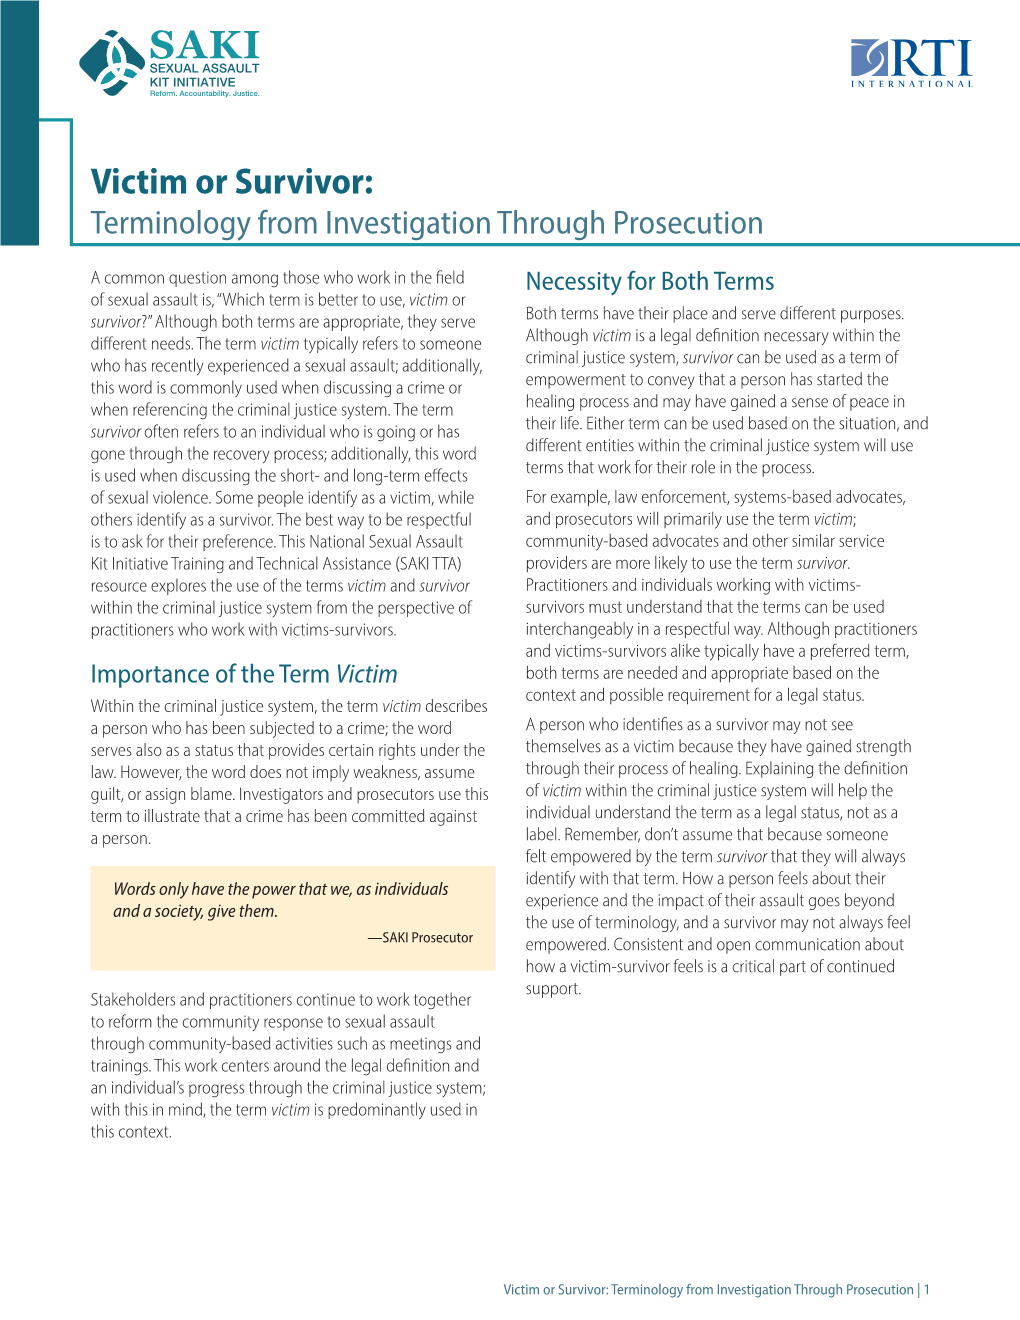 Victim Or Survivor: Terminology from Investigation Through Prosecution